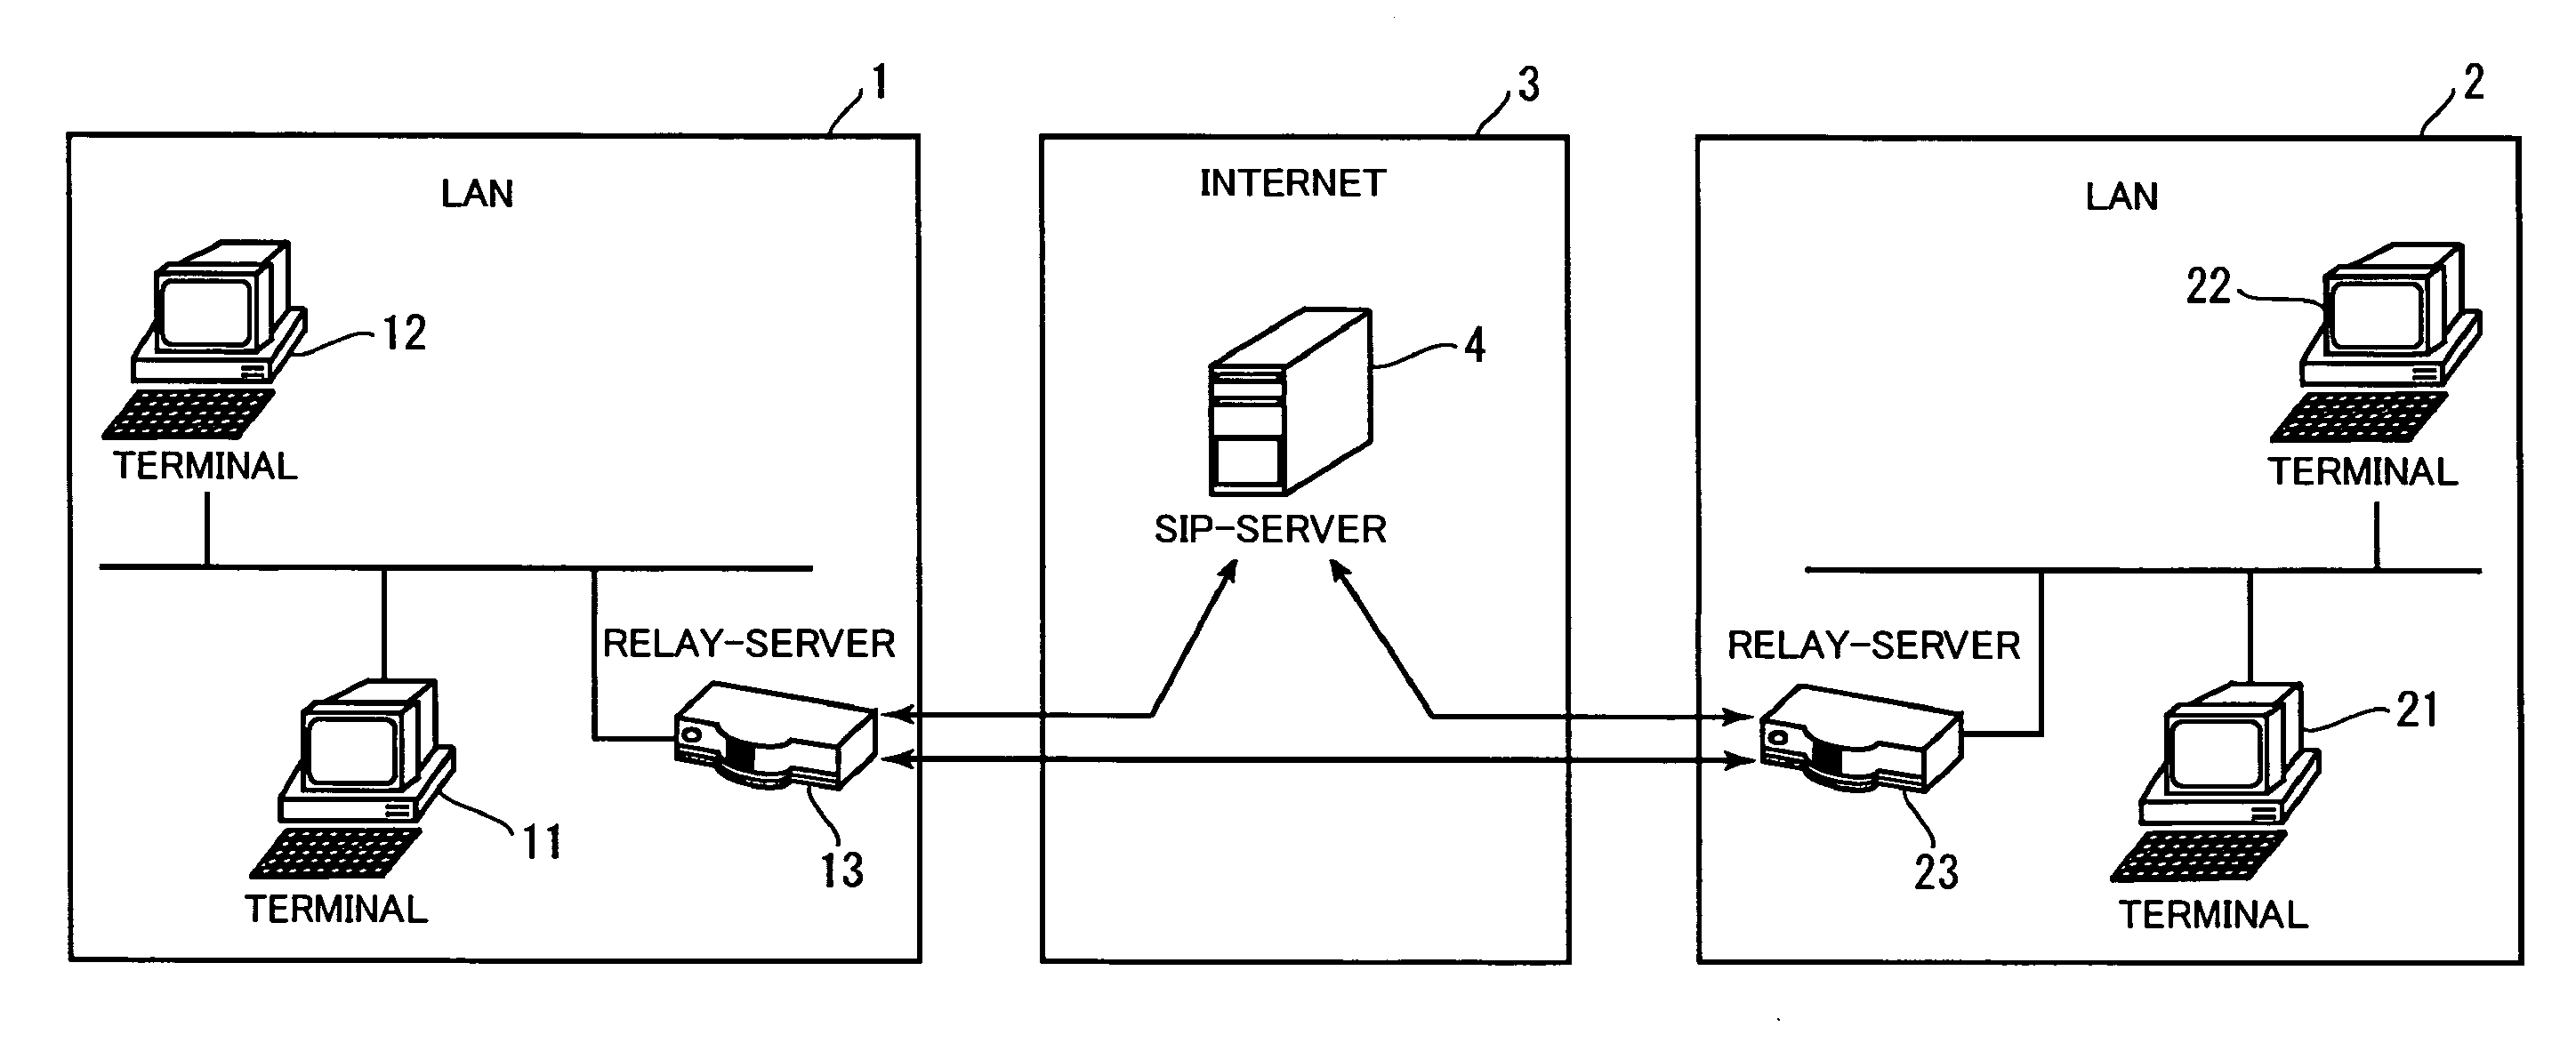 Relay-server